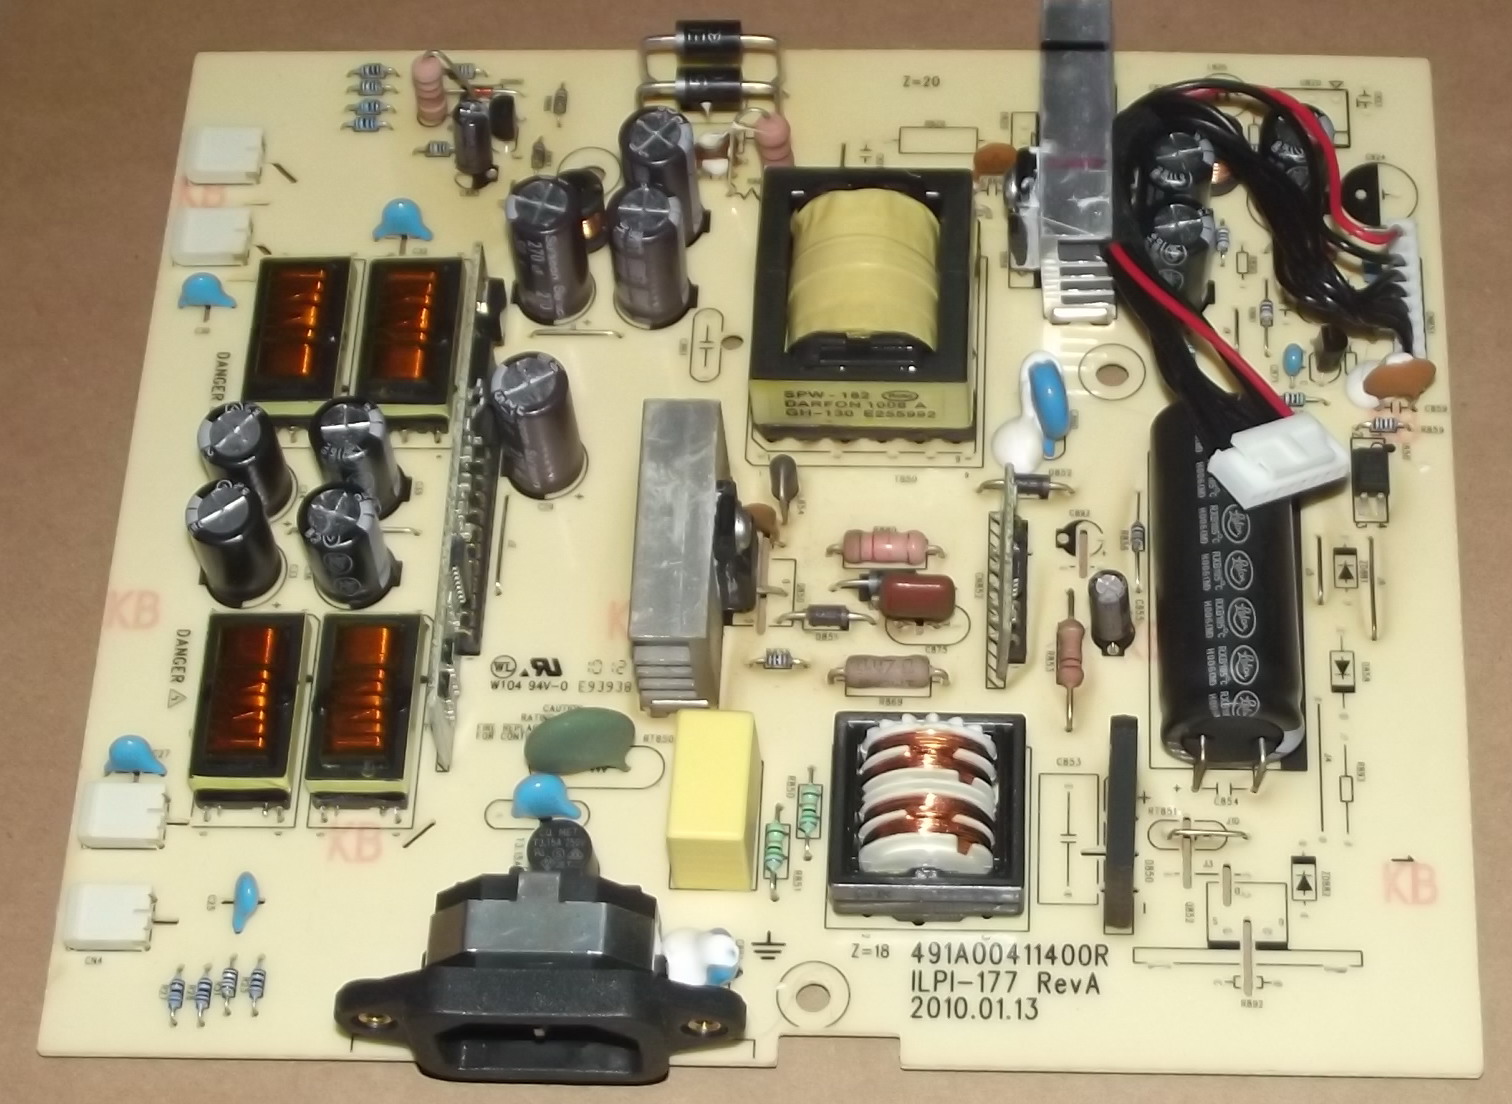 491A00411400R ILPI-177 lcd power inverter board